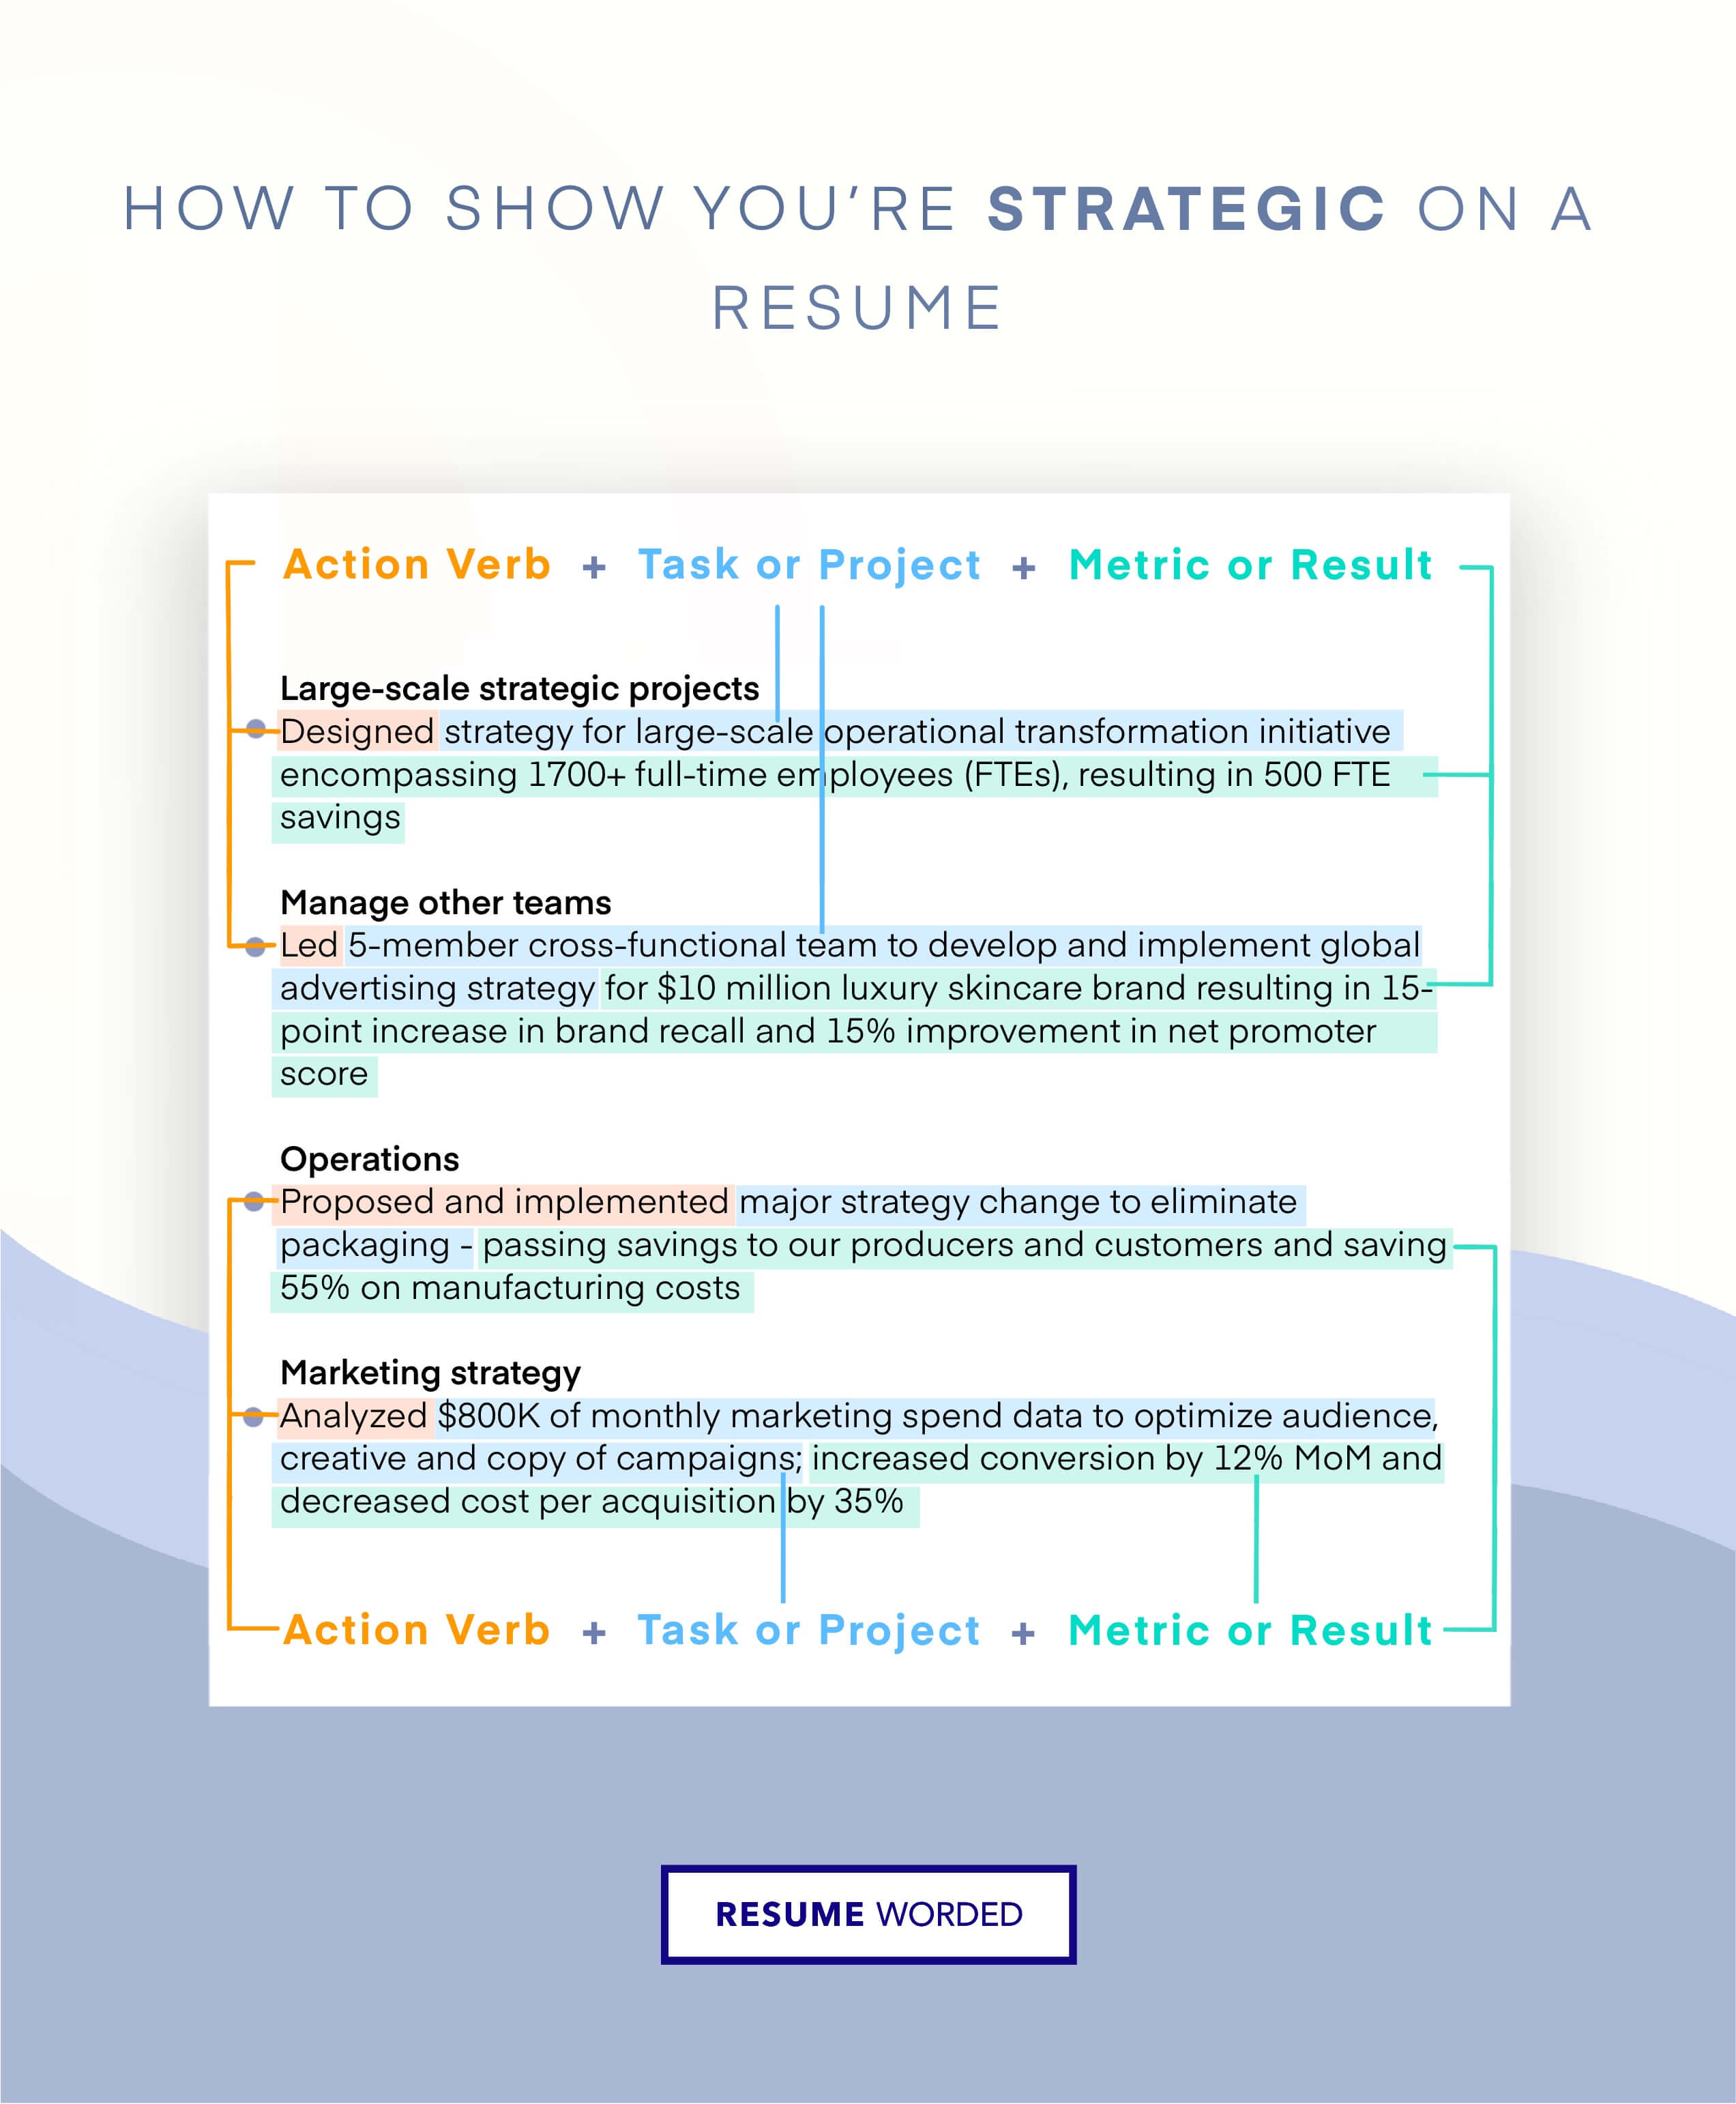 Showcase your strategic thinking - Director of Data Analytics CV